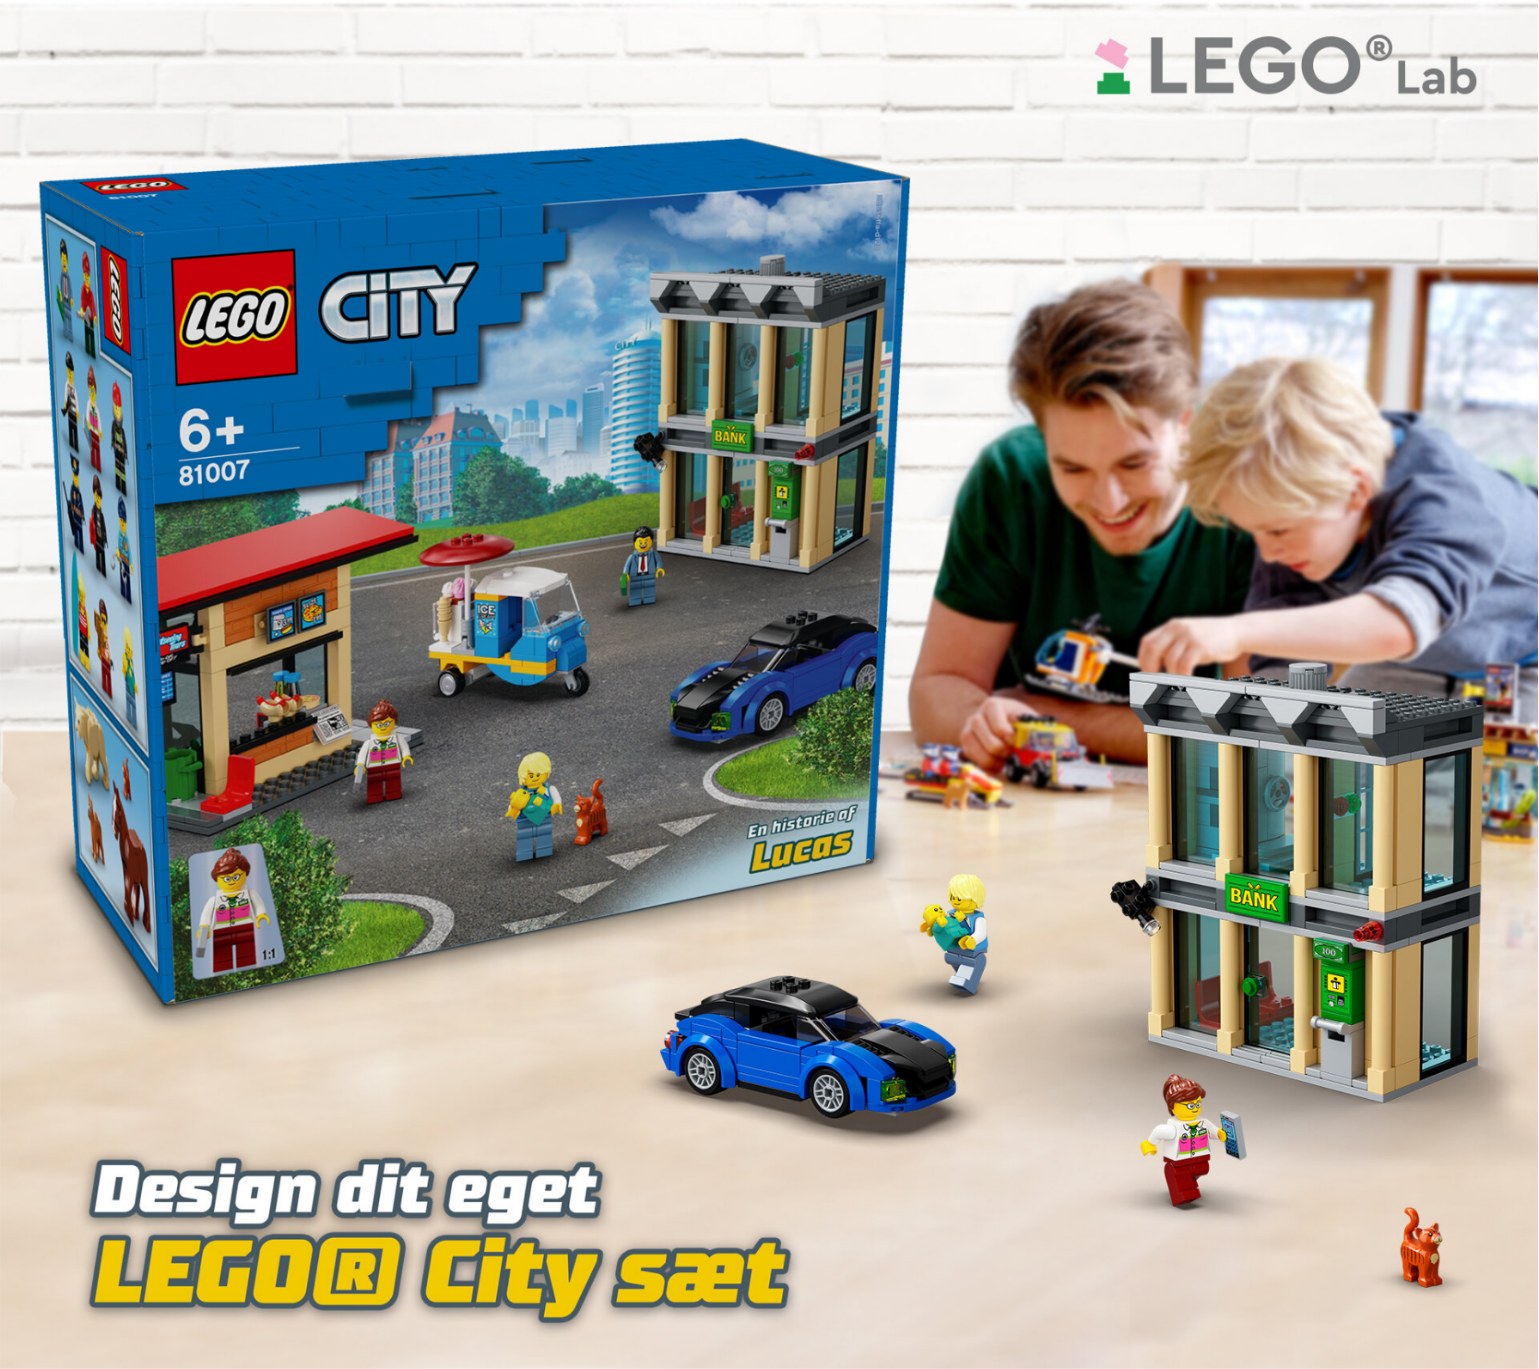 Crack pot overdraw Atlantic Design your own LEGO City set | Brickset